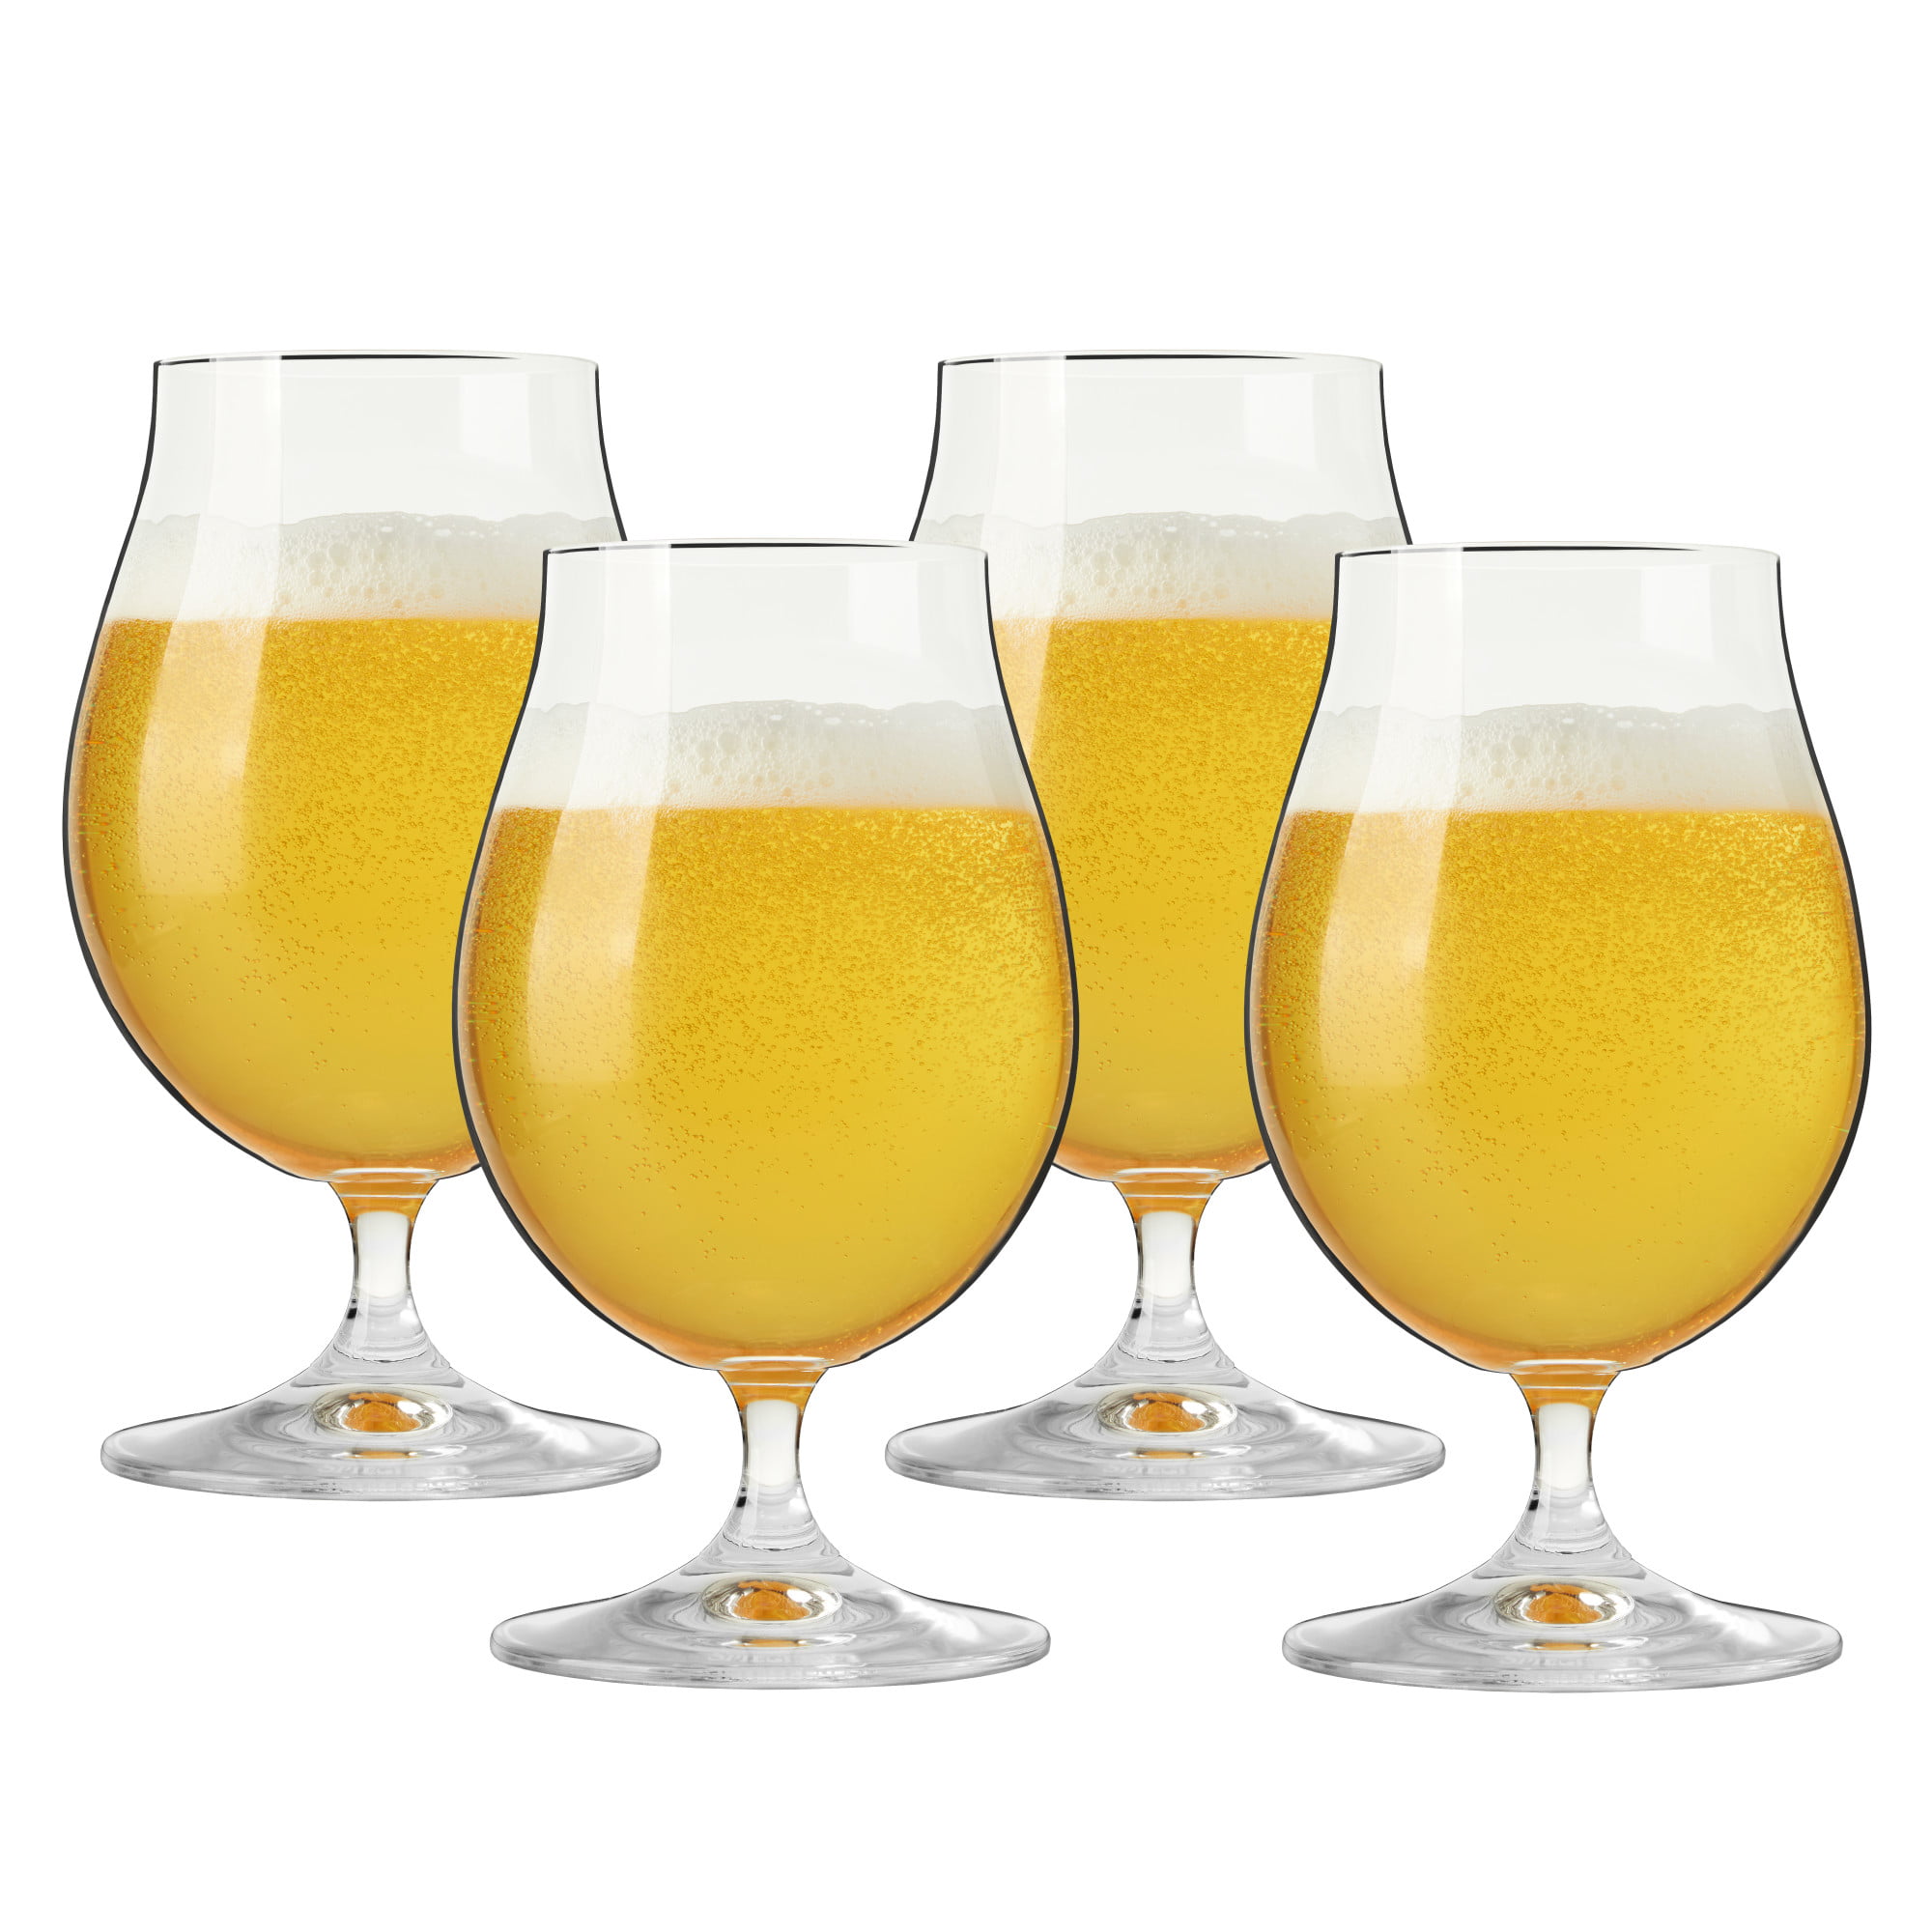 Wrenbury Tulip Beer Glasses Set of 2 - Fjord Beer Chalice Large Belgian  Beer Glass - IPA Stout Glass…See more Wrenbury Tulip Beer Glasses Set of 2  